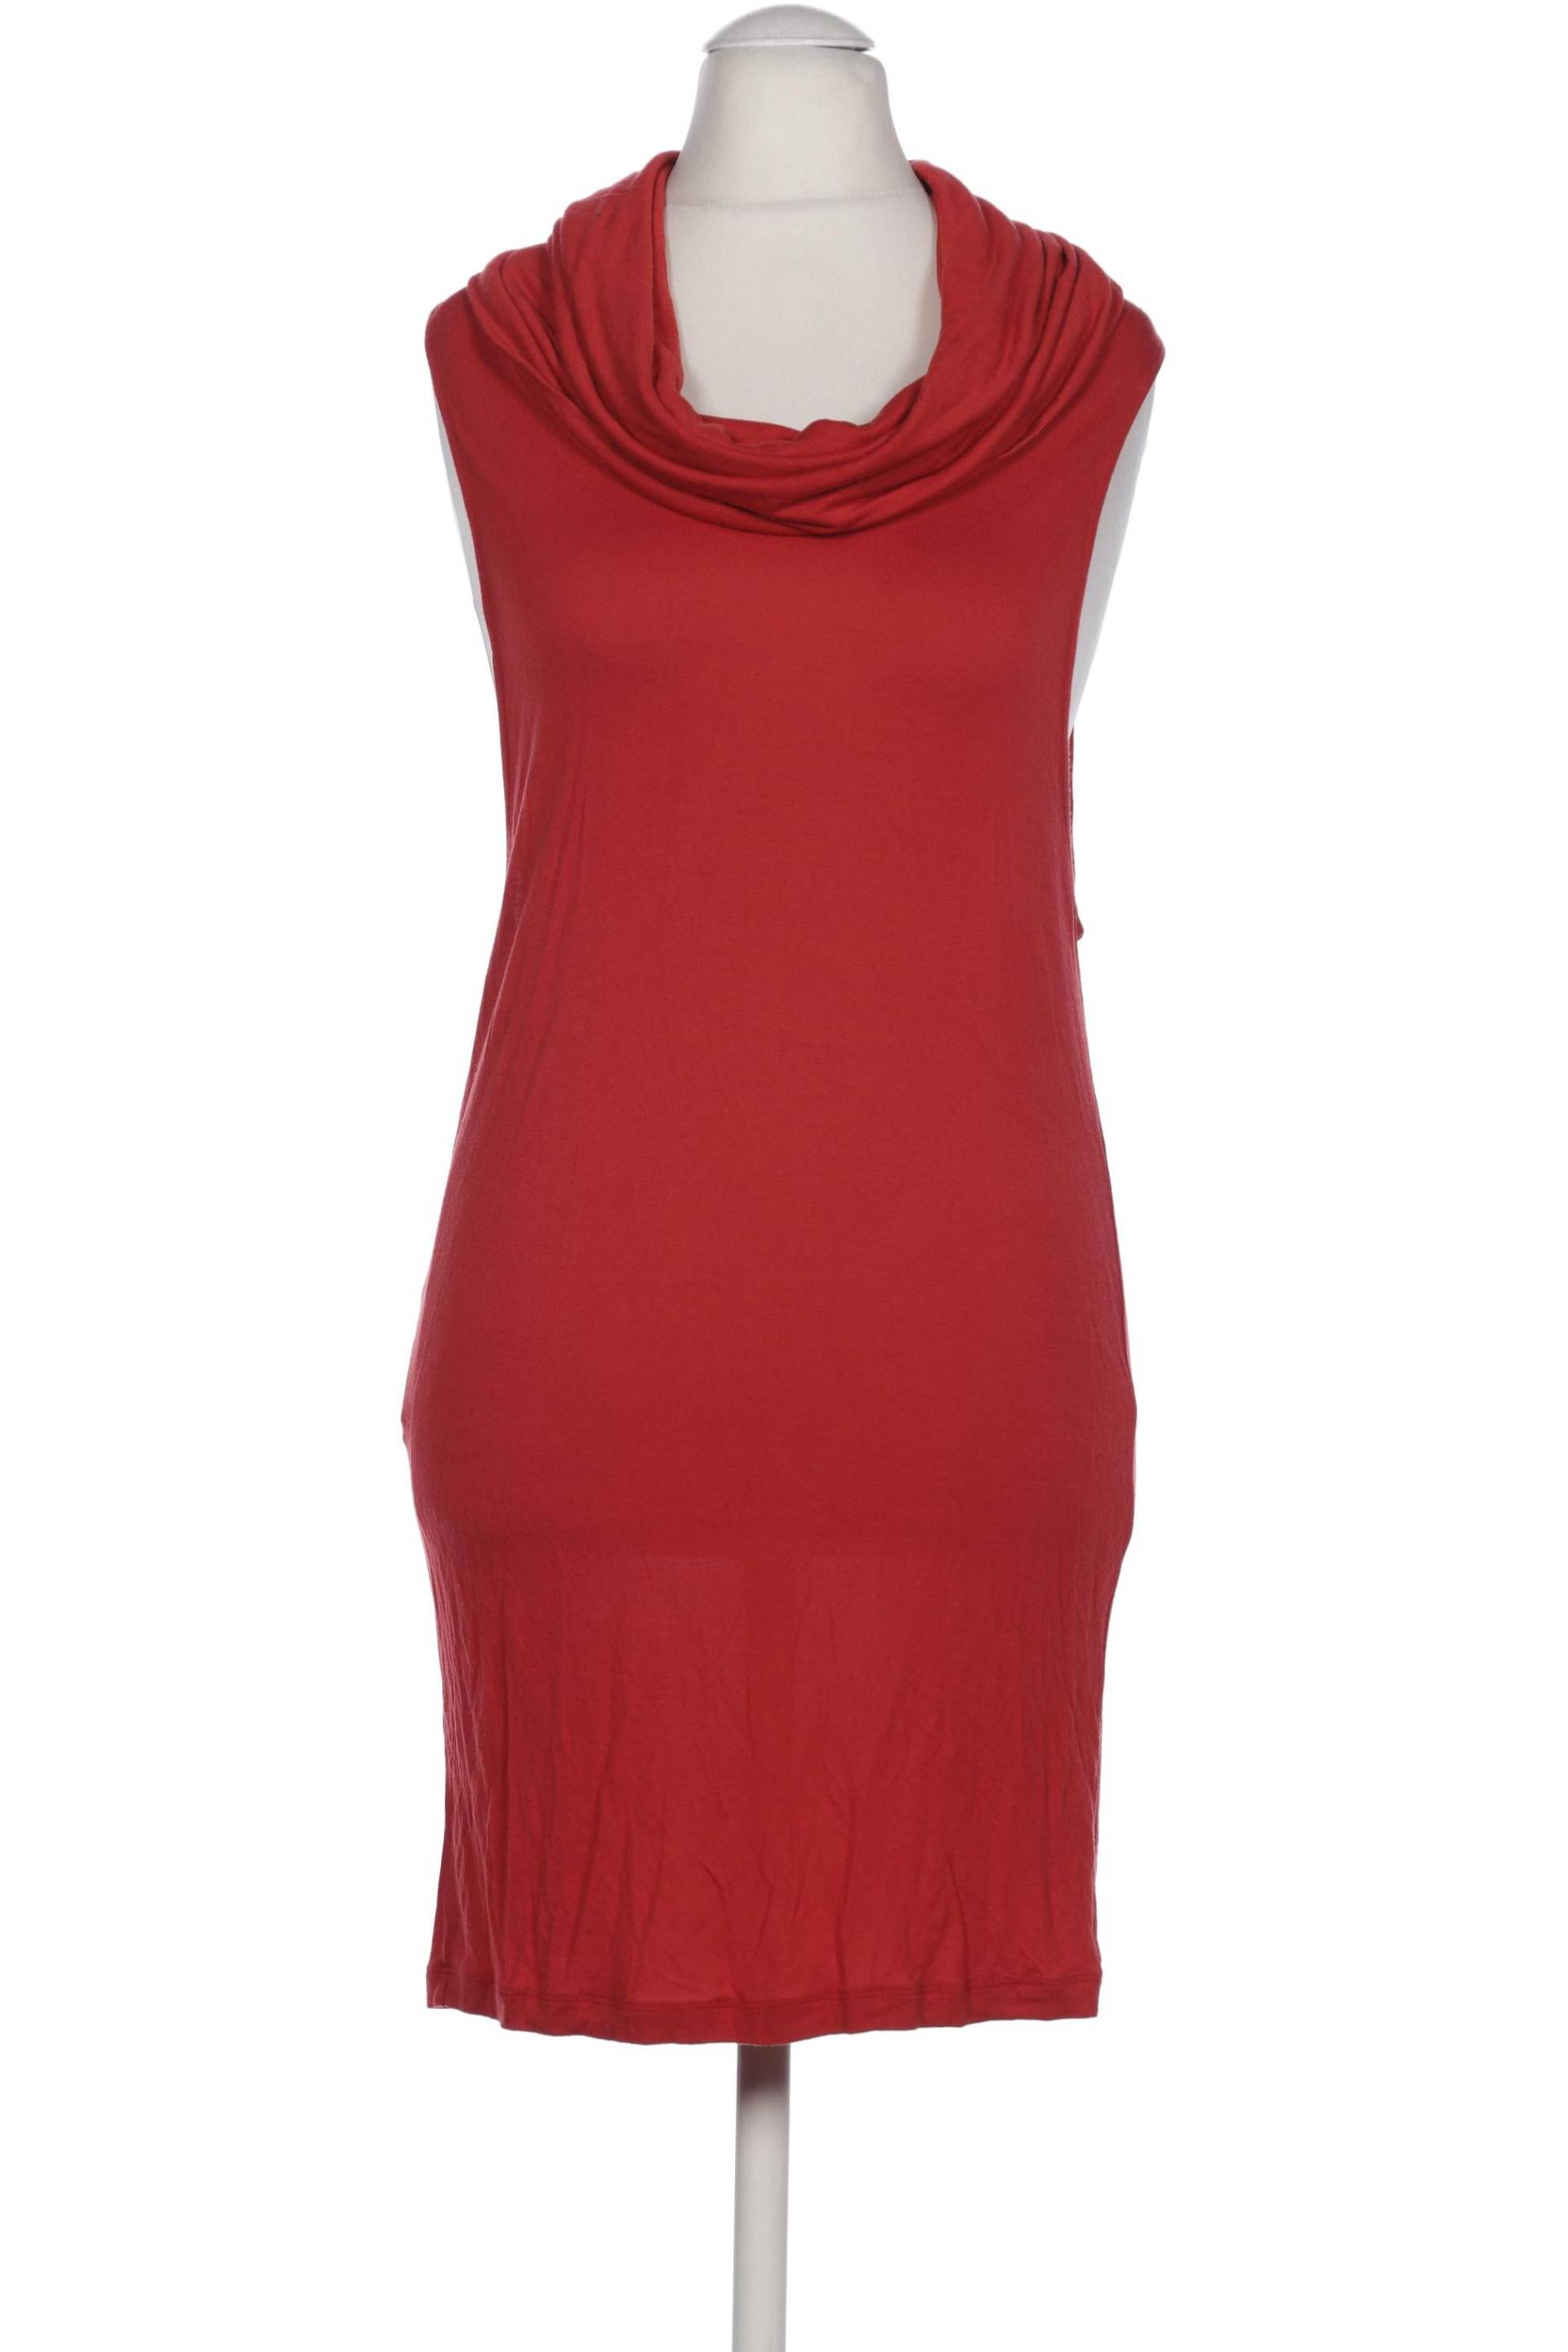 Stefanel Damen Kleid, rot, Gr. 38 von Stefanel